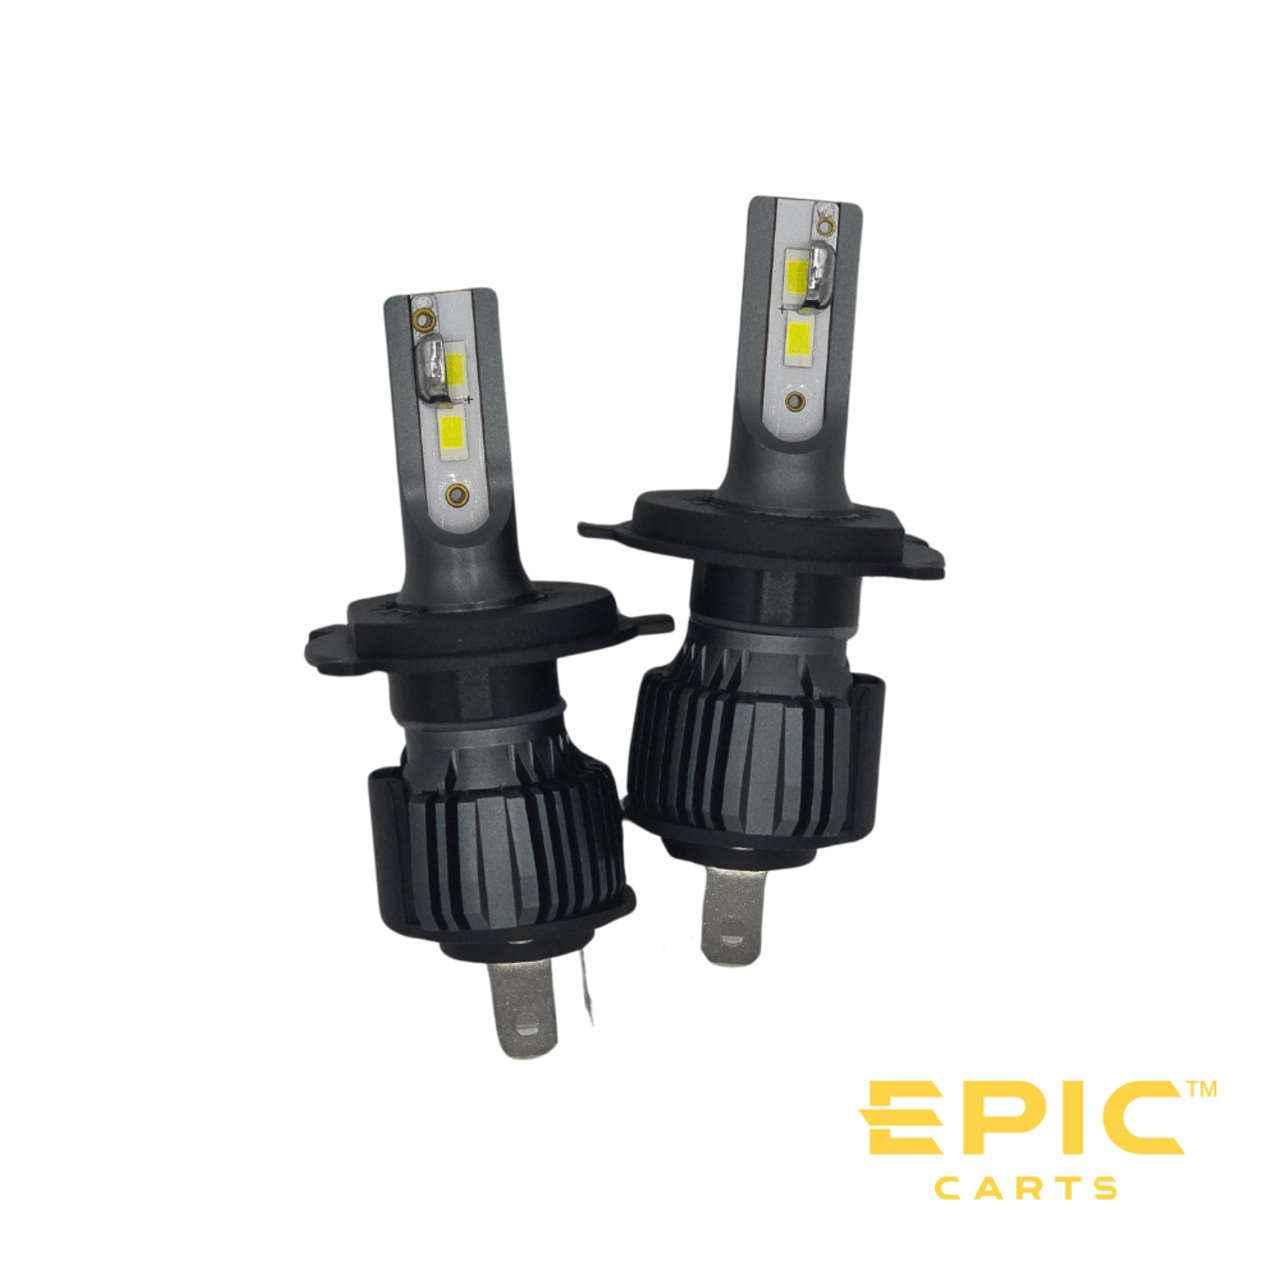 HS1 12V 35/35W Headlight Bulb for EPIC Old Model Golf Carts, LIGHT-EP506, 3208060043